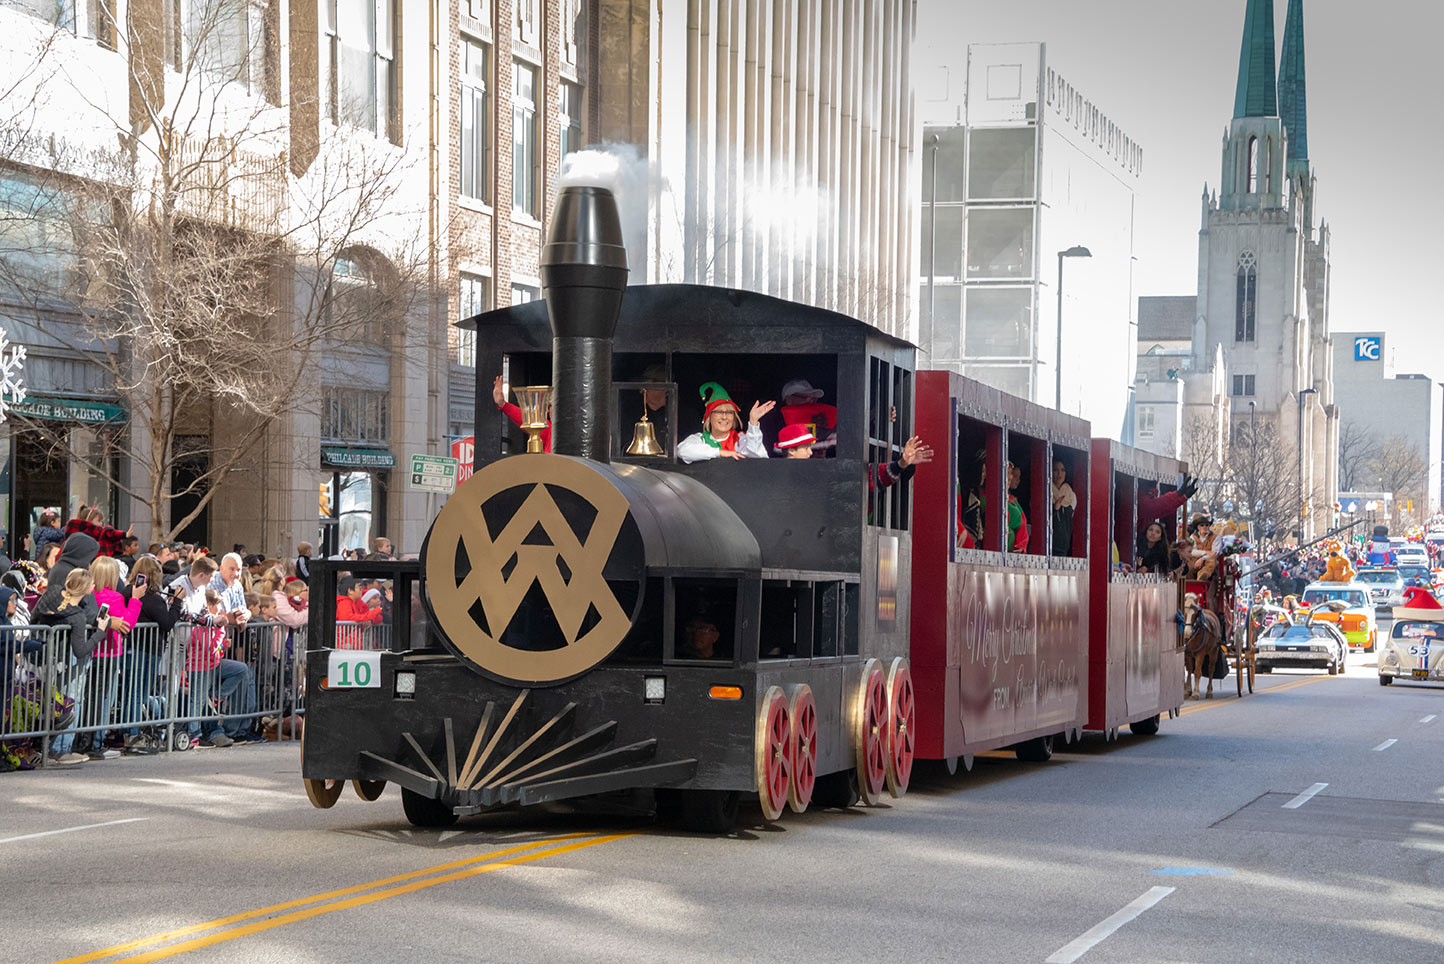 The Tulsa Christmas Parade